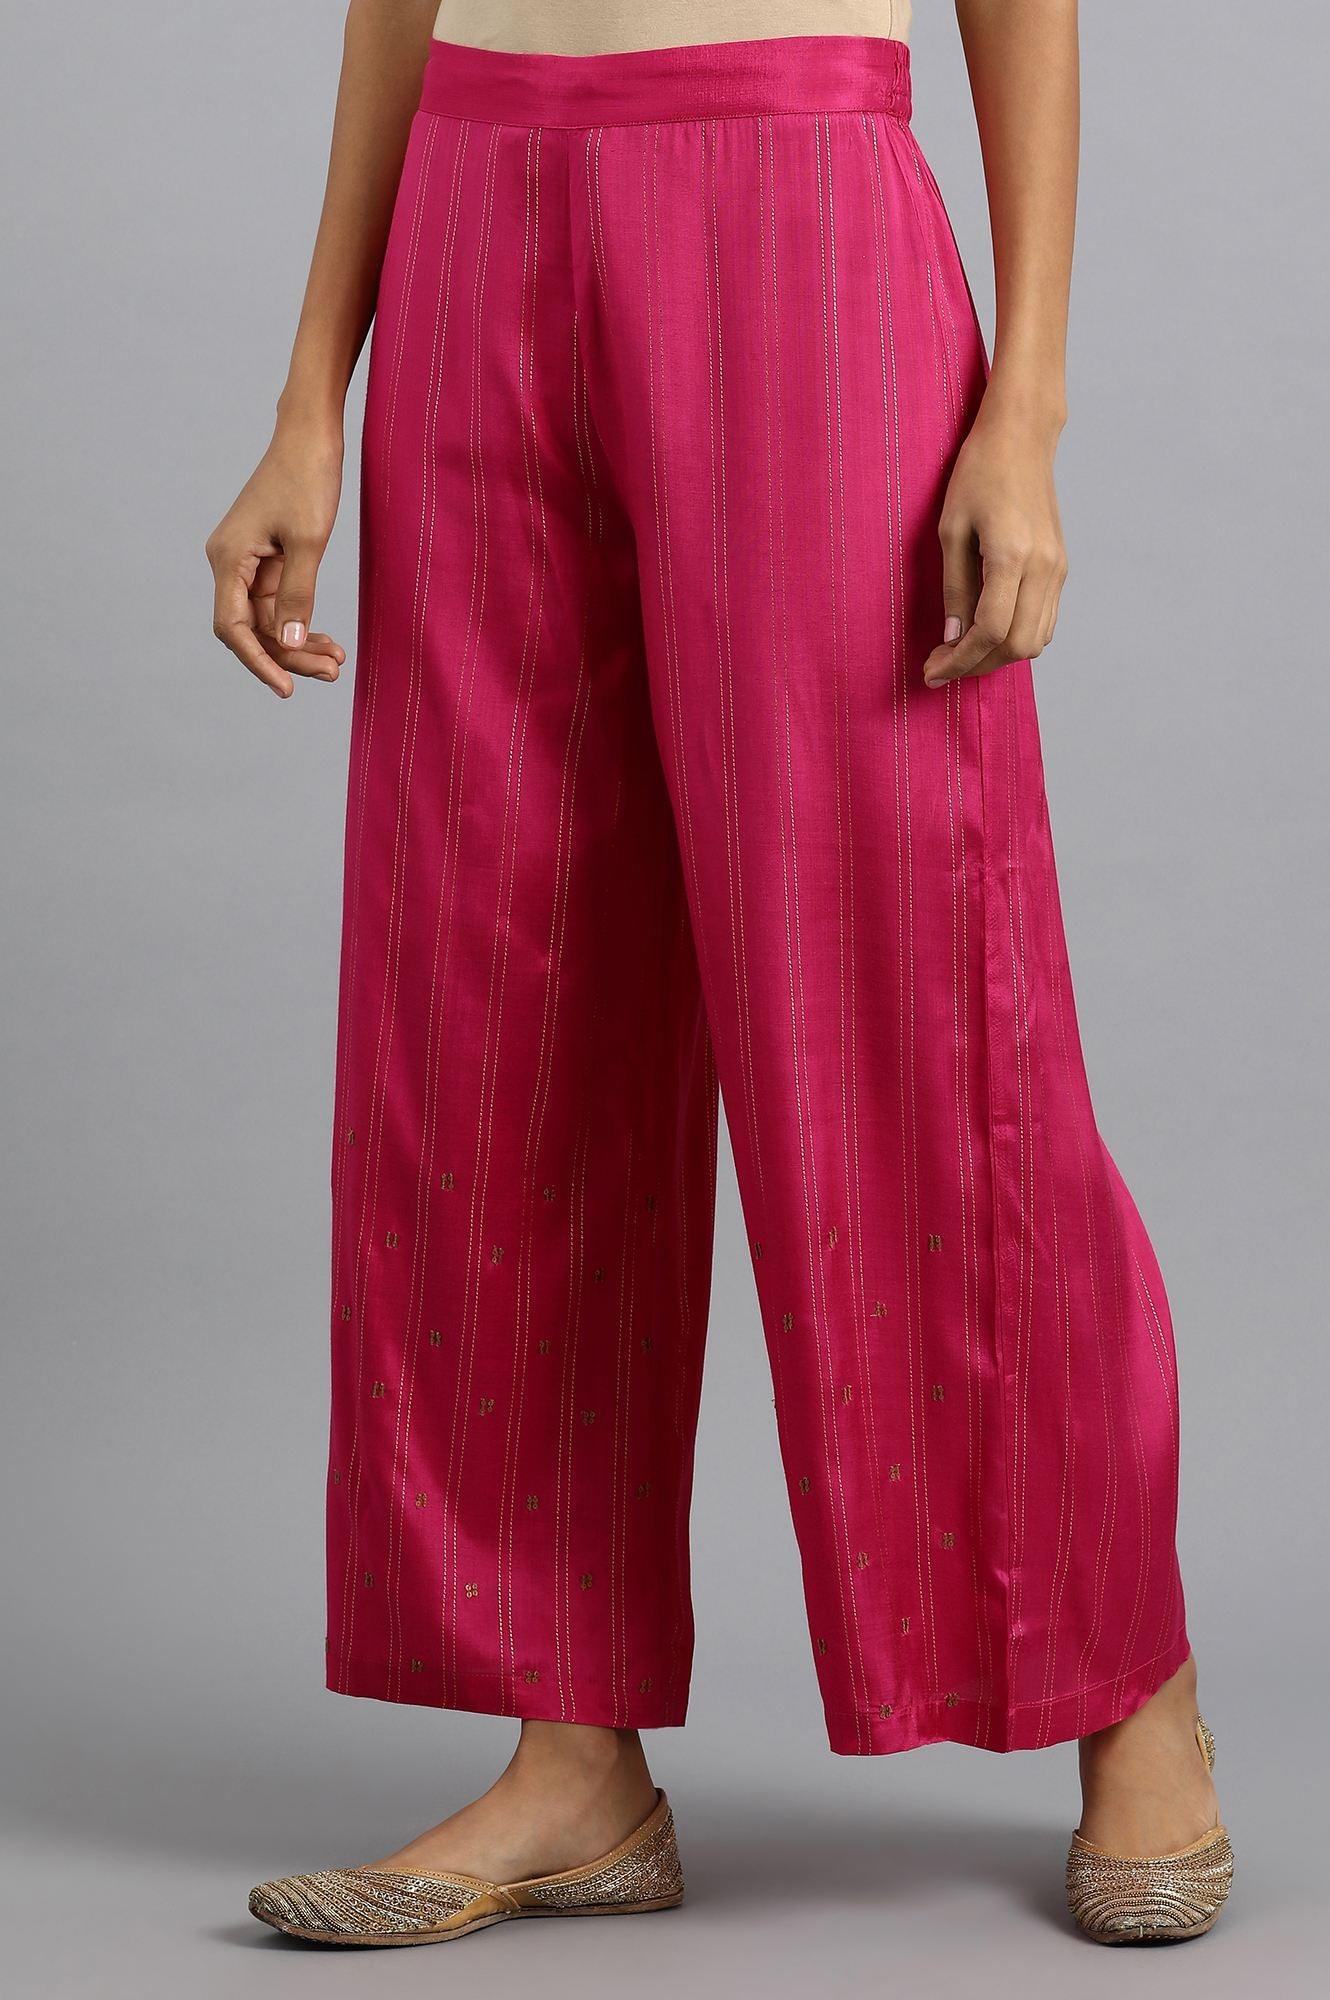 Pink Printed Parallel Pants - wforwoman